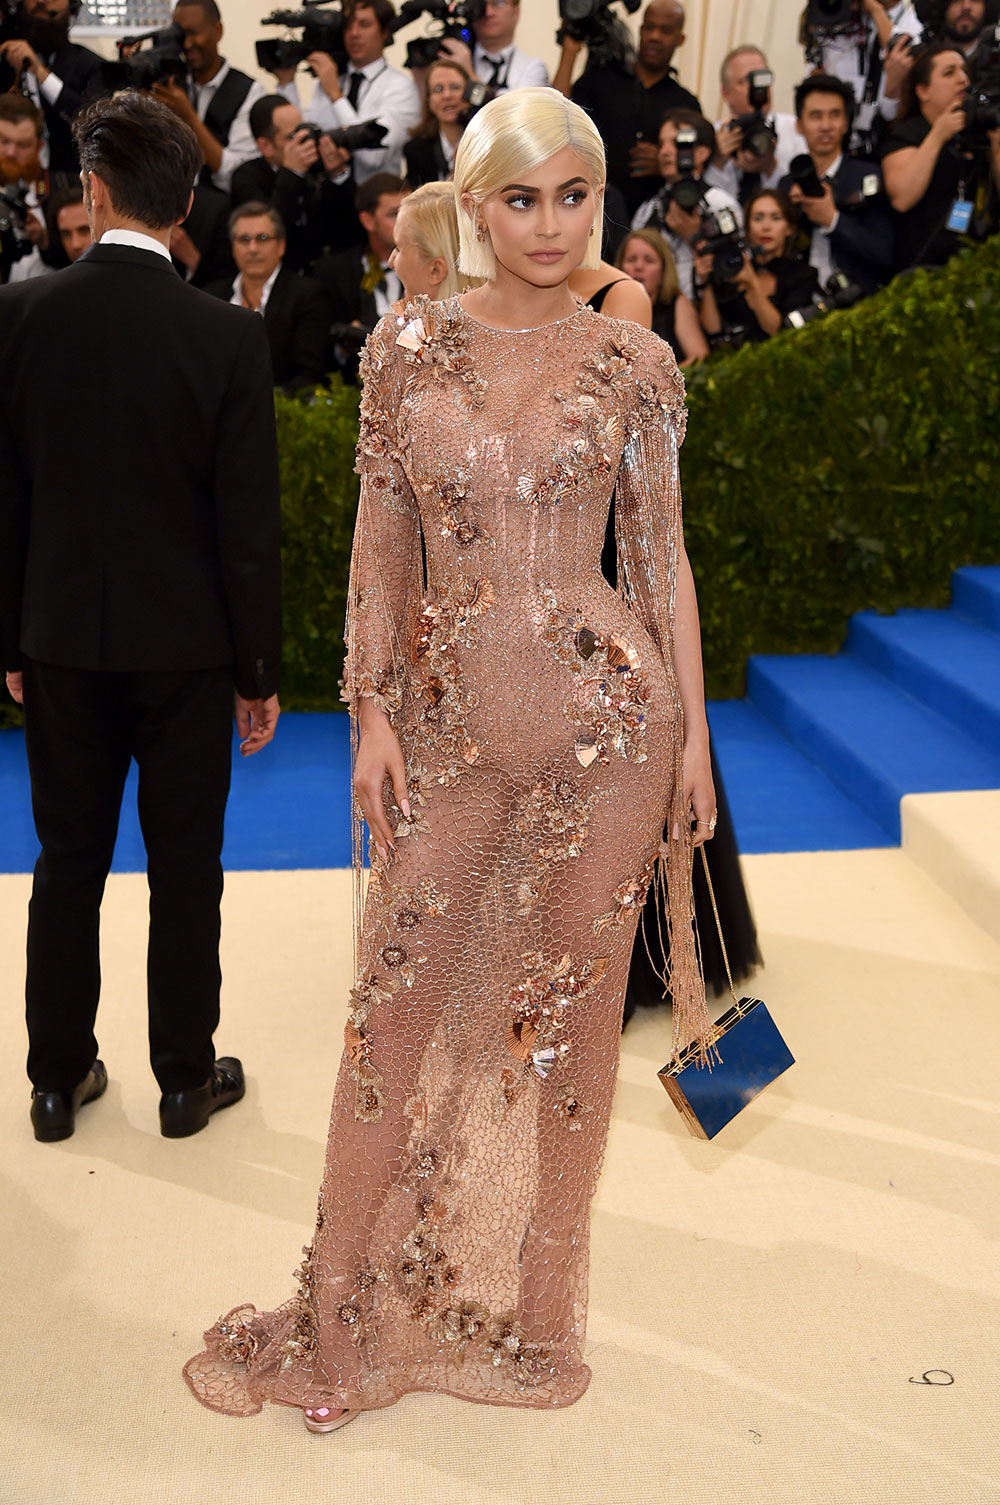 Kylie Jenner wearing Versace.